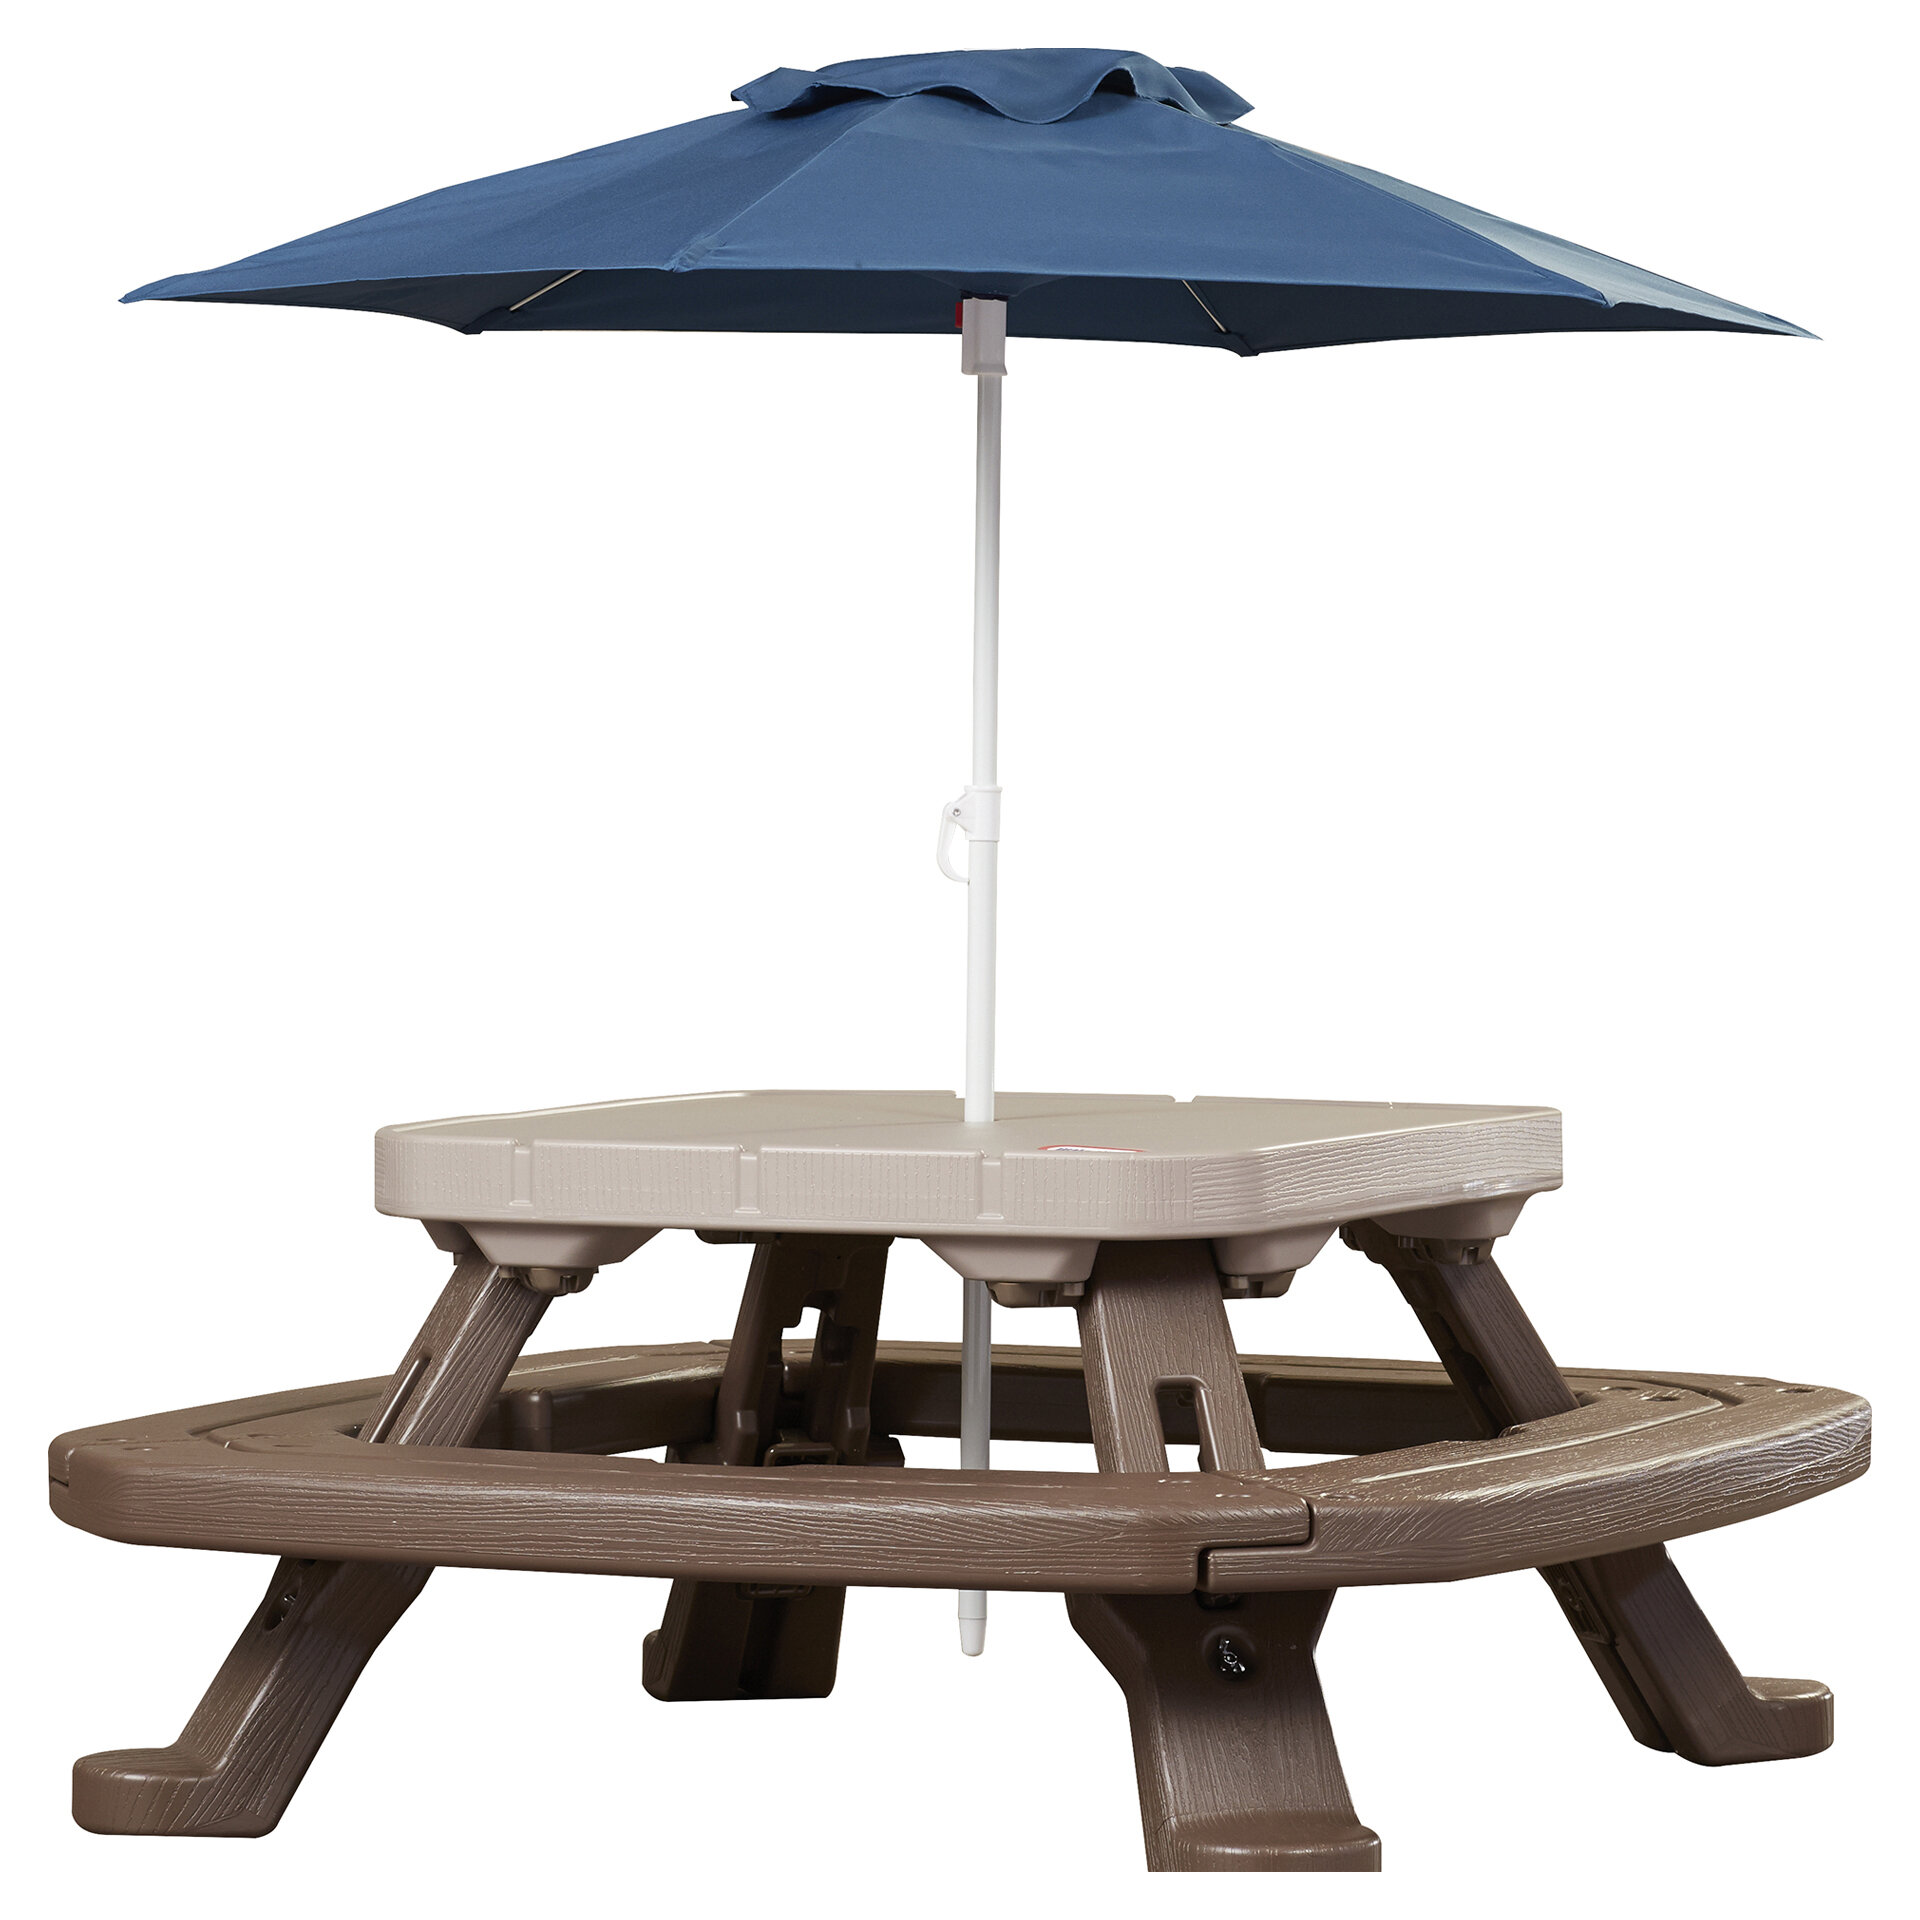 Details about   Kids Picnic Table Bench Children Outdoor Folding Garden Set Deluxe Umbrella USA 